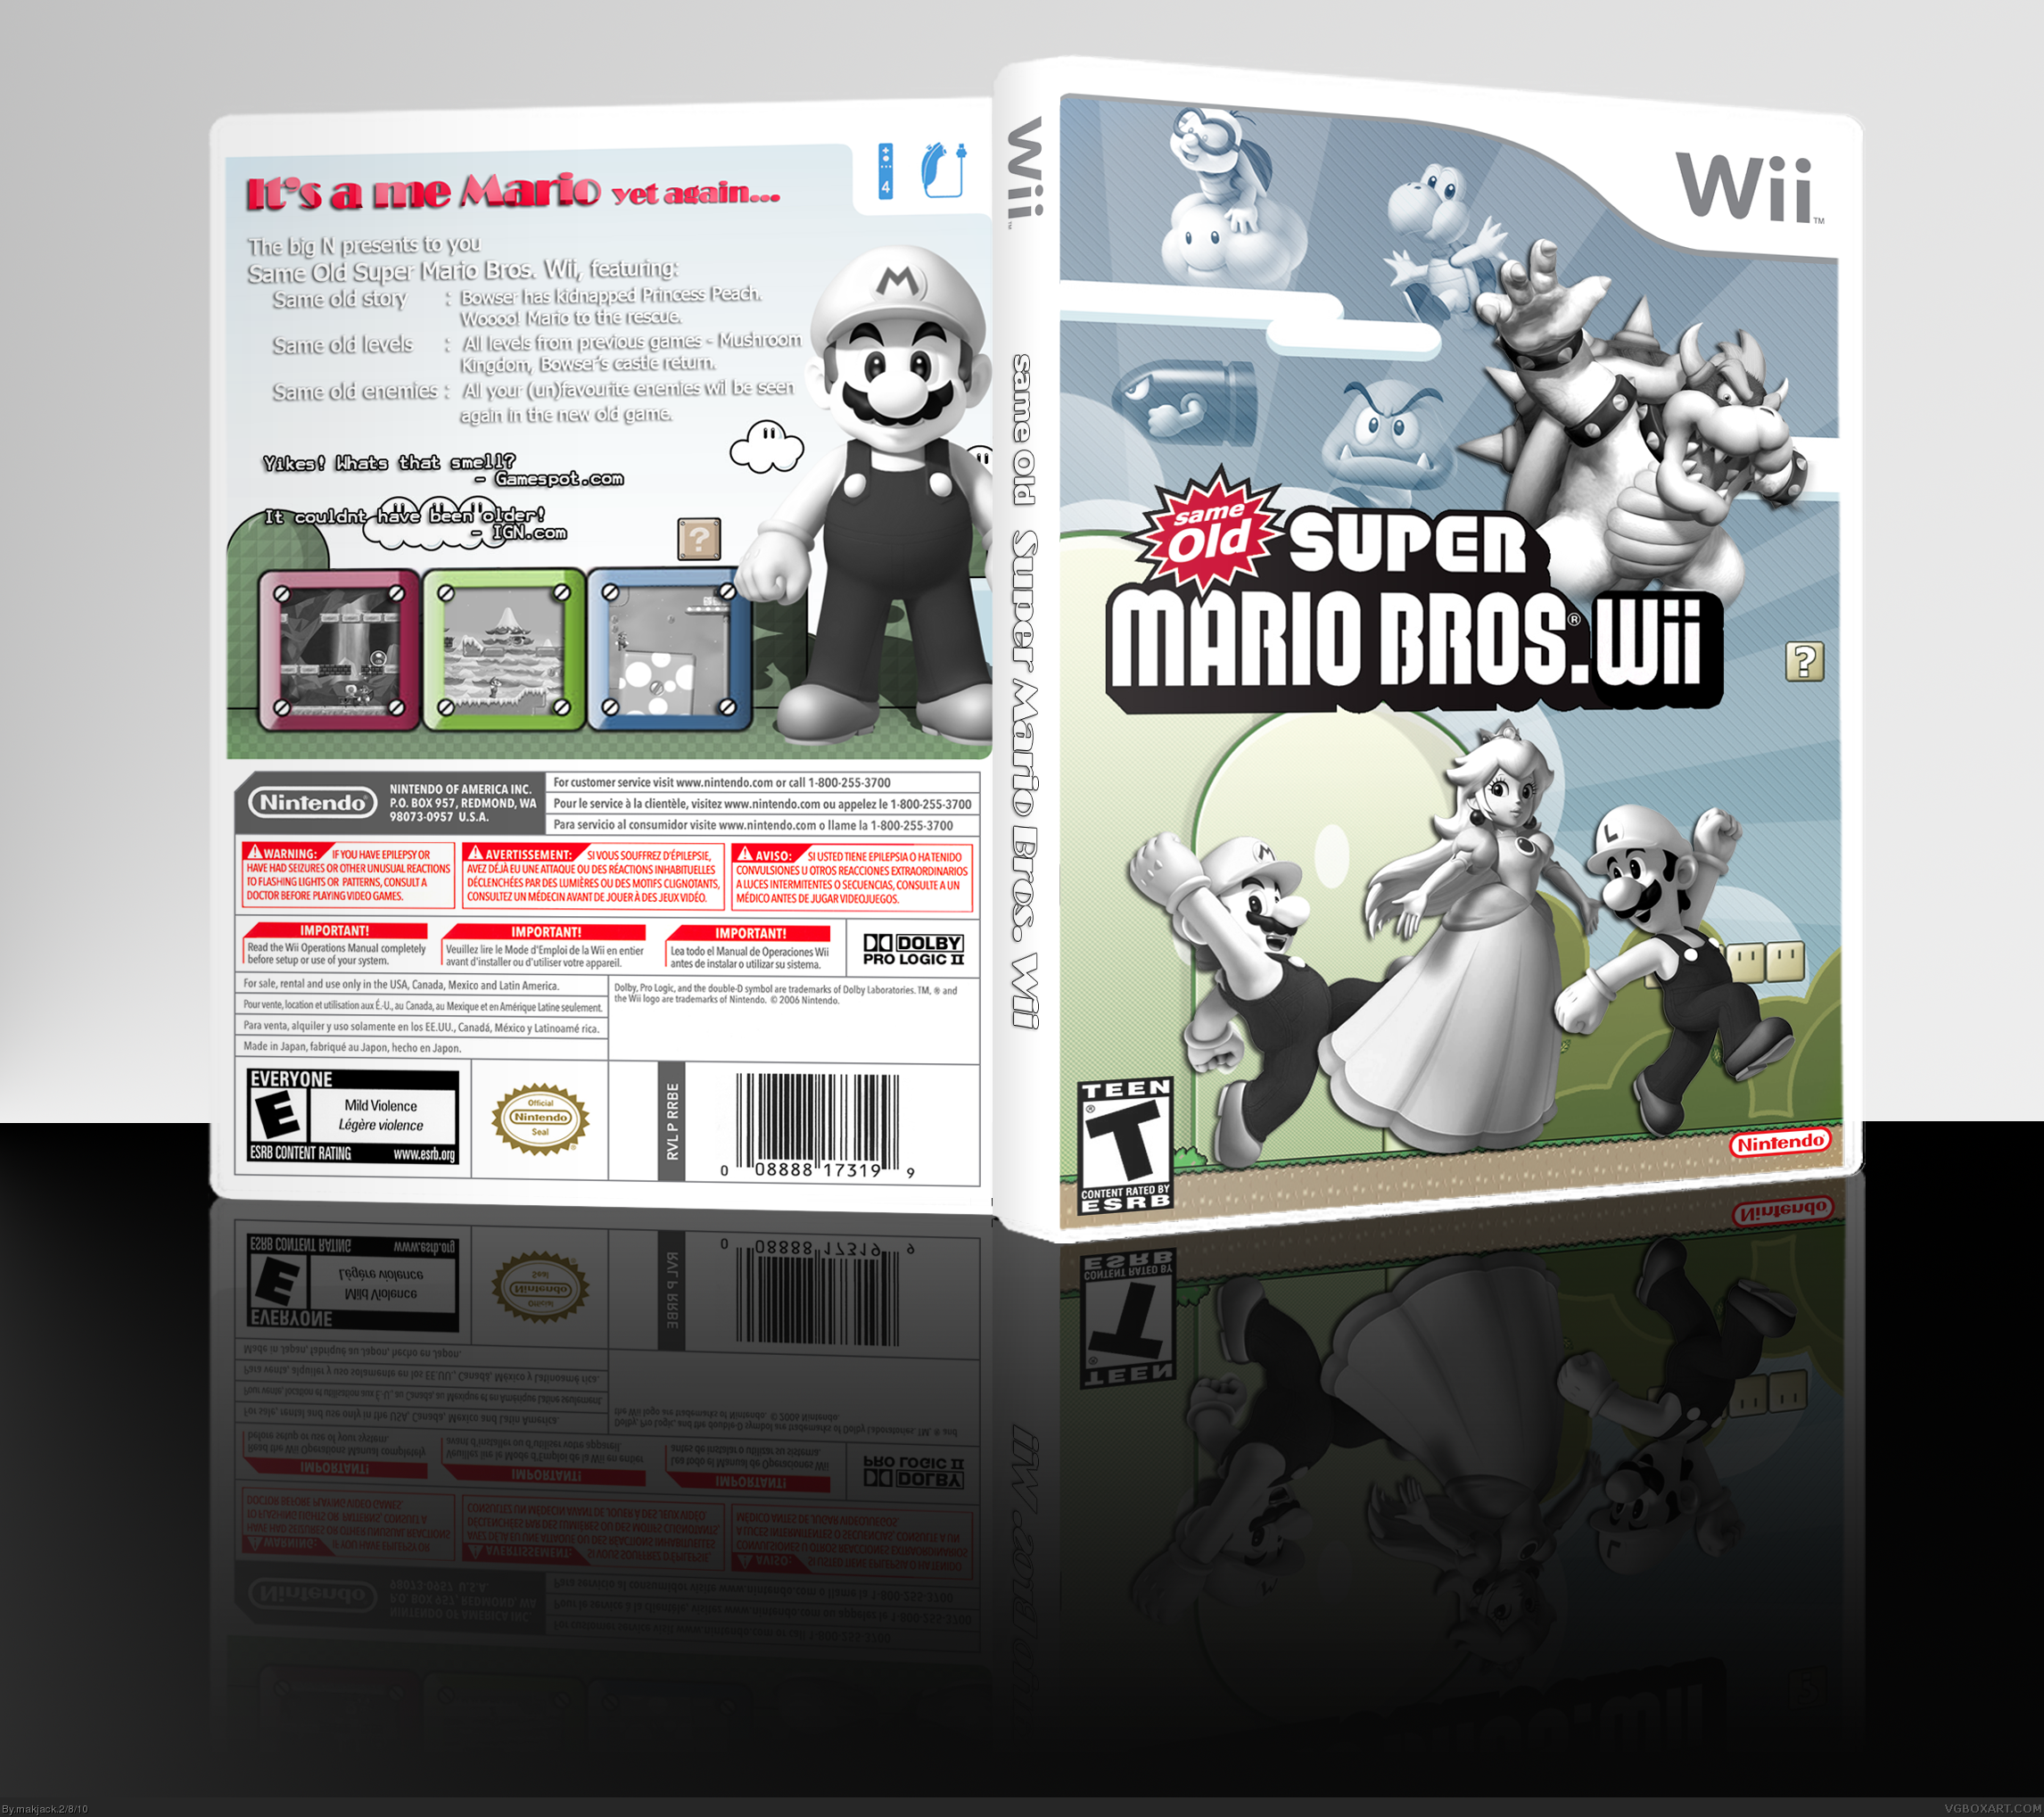 Same Old Super Mario Bros. Wii box cover